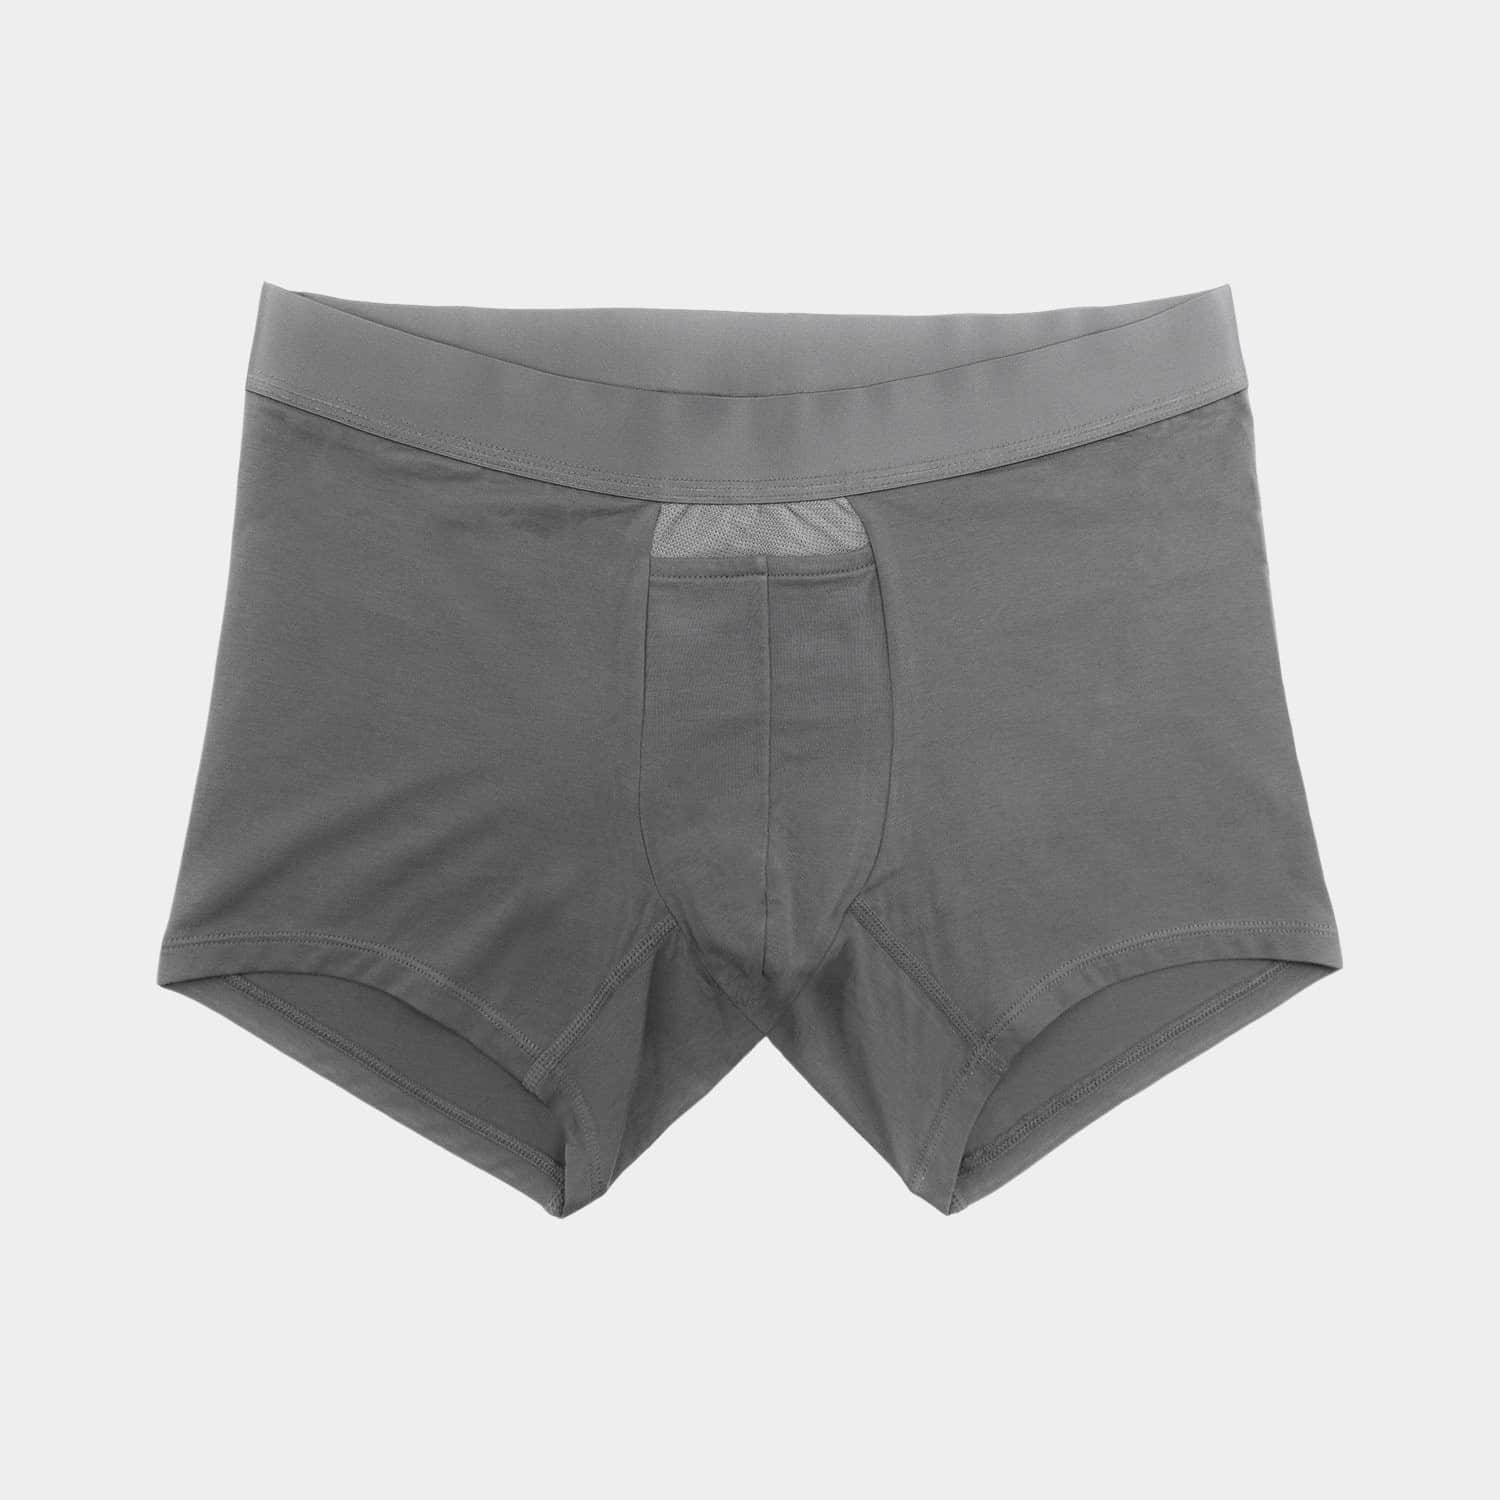 Silver Boxers - Premium Men's Underwear - BeClothed